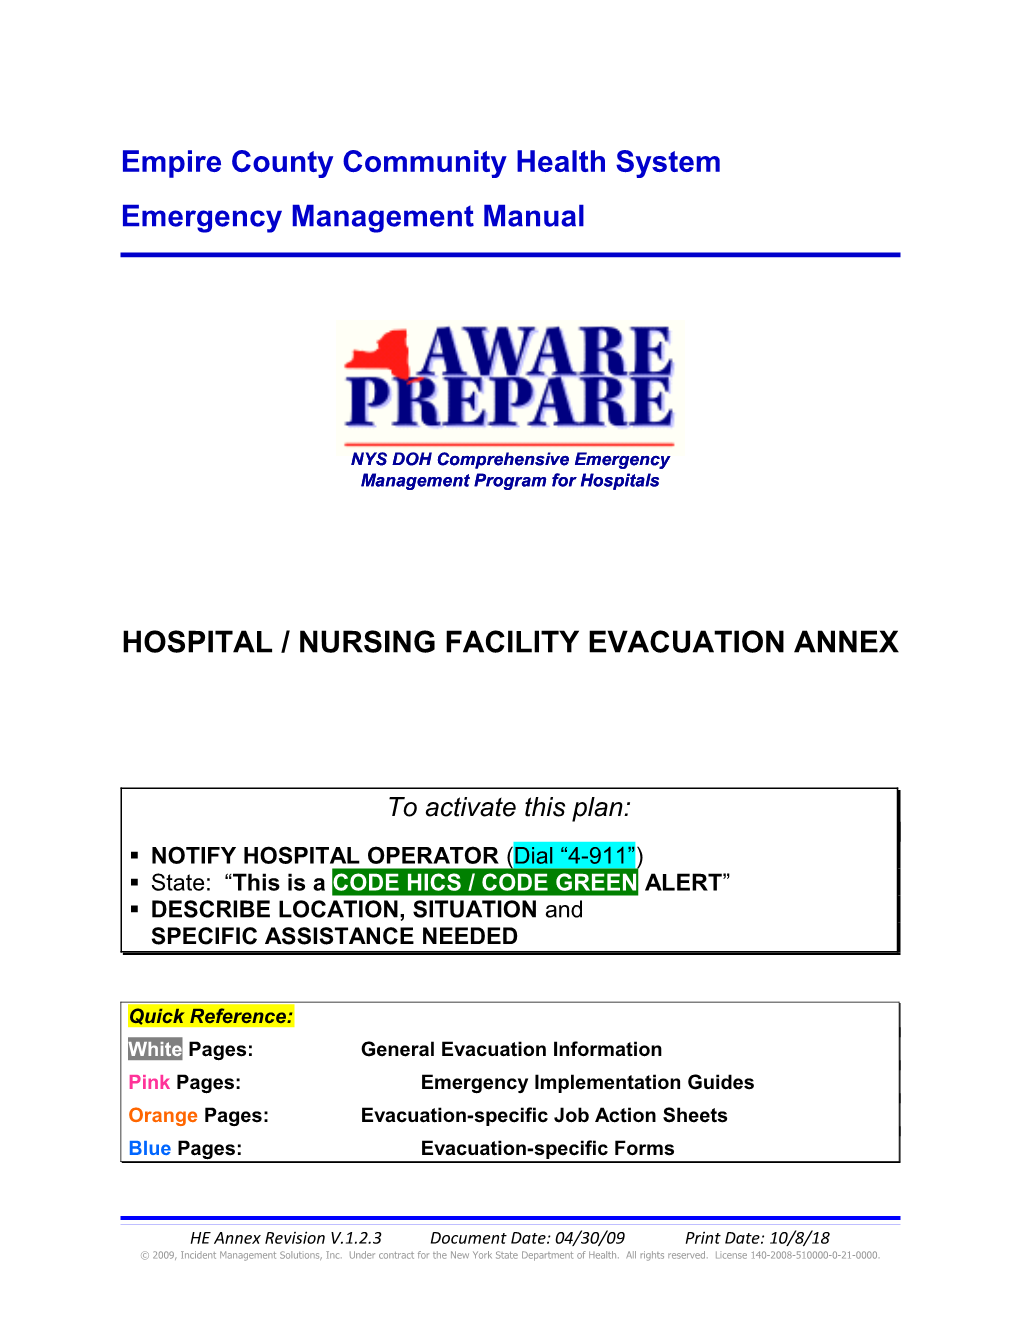 Medical Facility Evacuation Annex